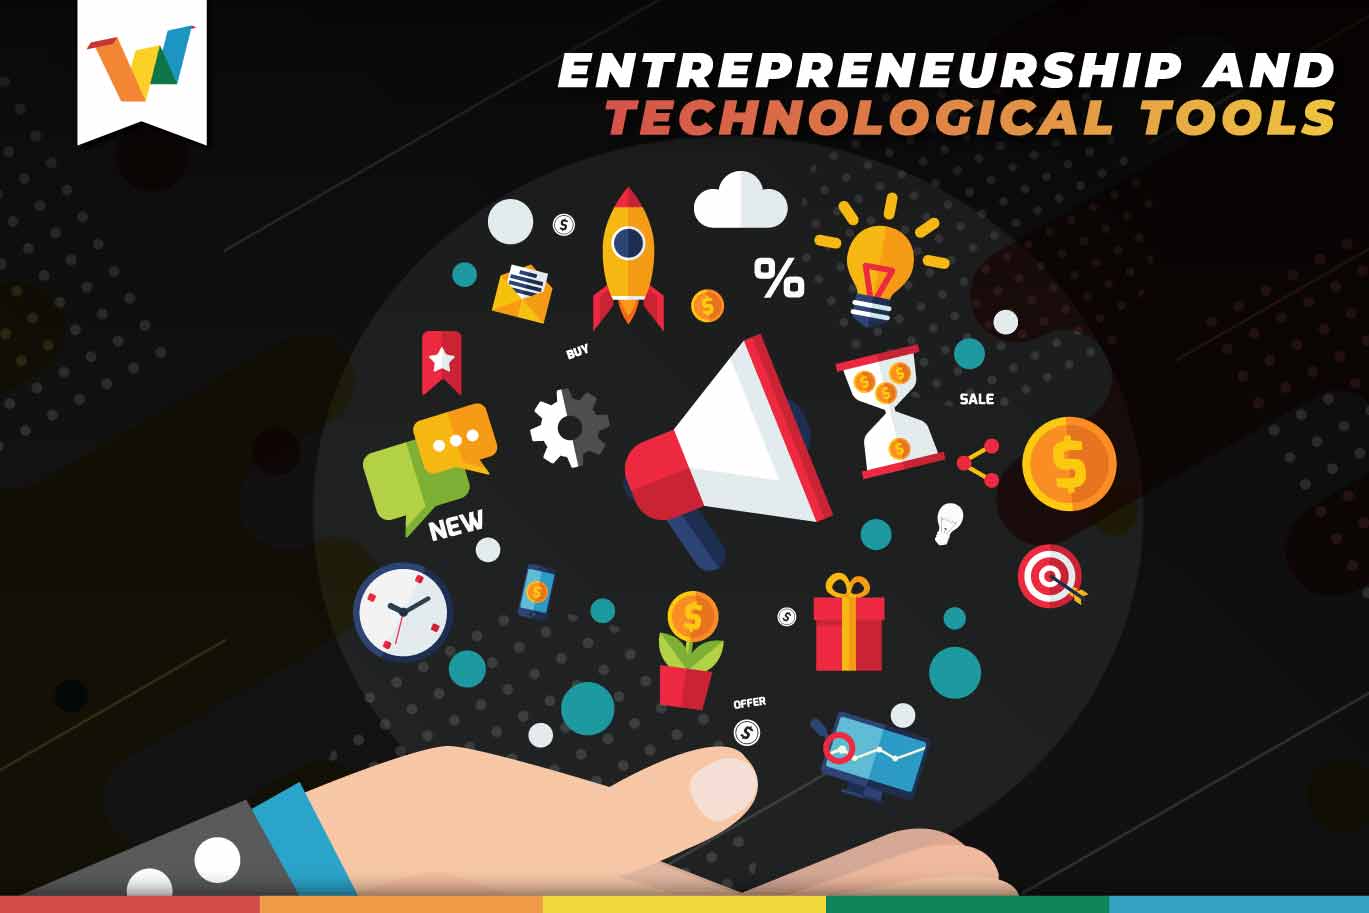 Entrepreneurship and technological tools